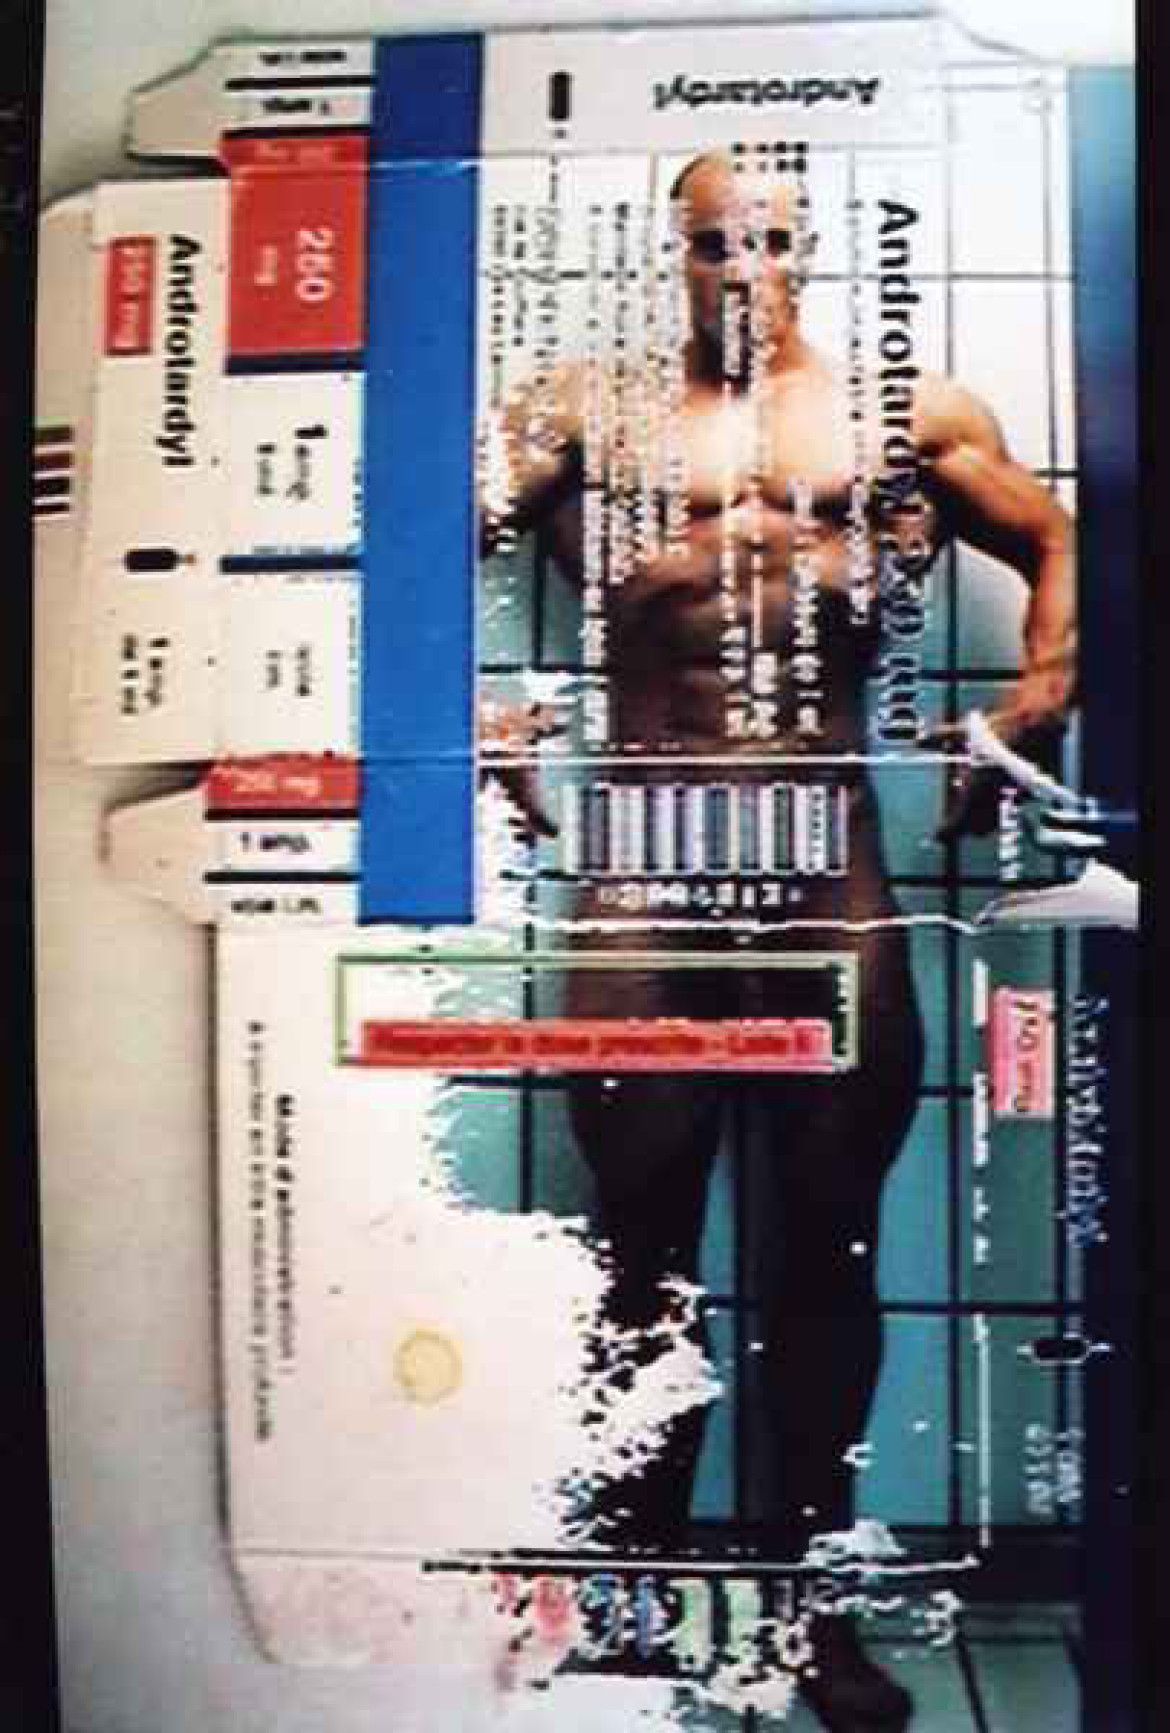 fot. Martial Cherrier, Série "Food or Drugs", 2000 